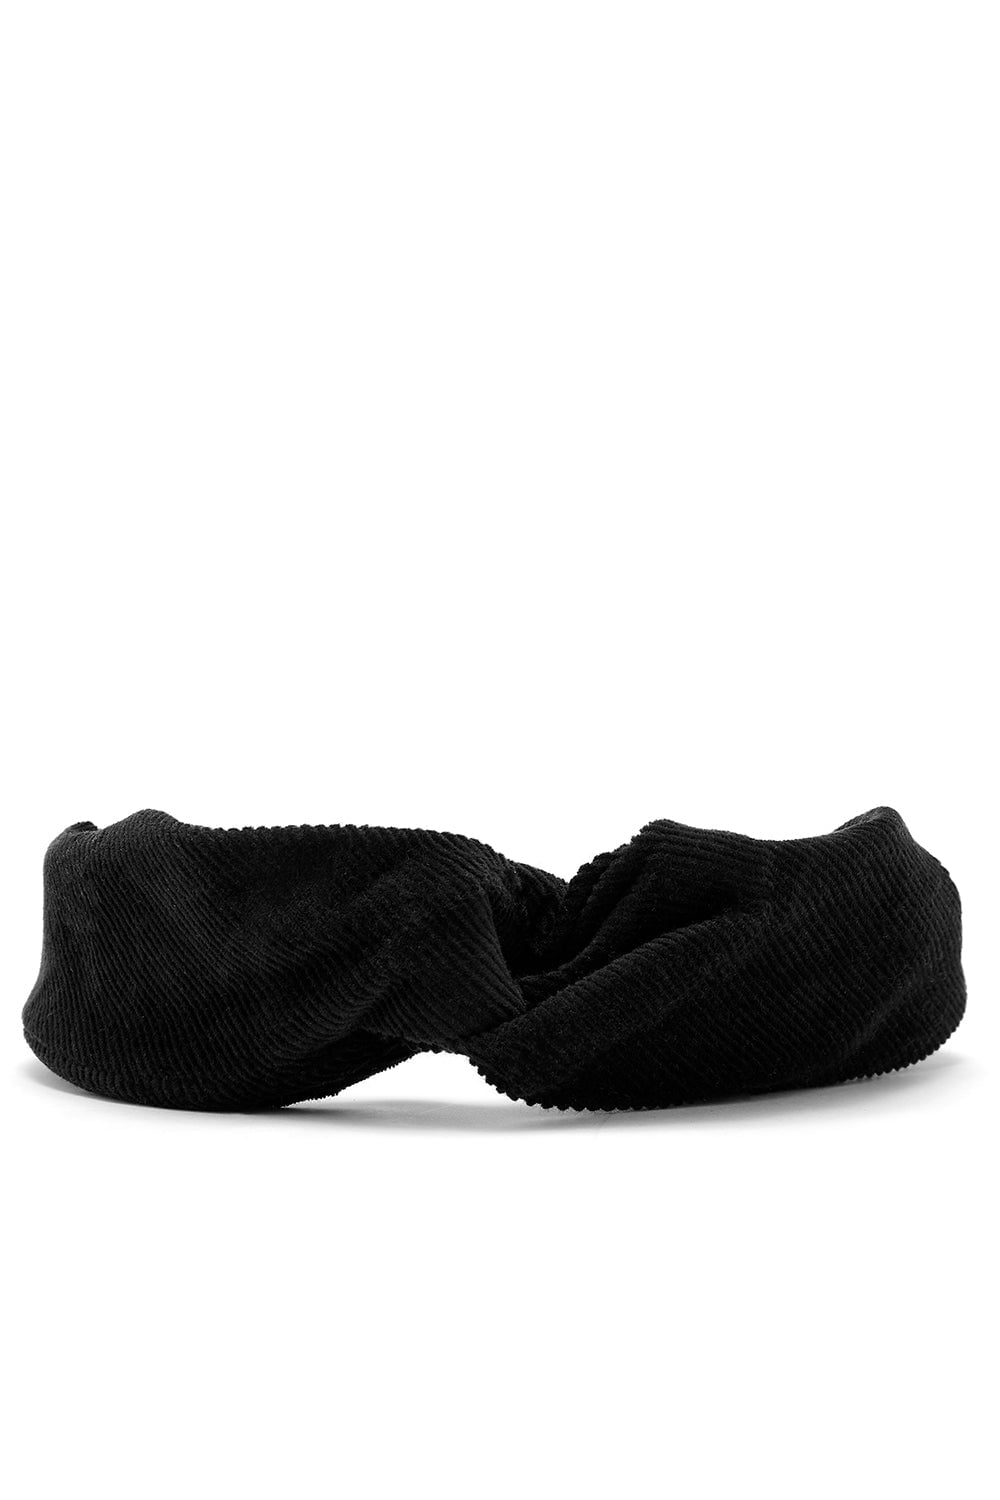 Lucy & Yak Headbands Hallie Headband: ZERO WASTE - Black